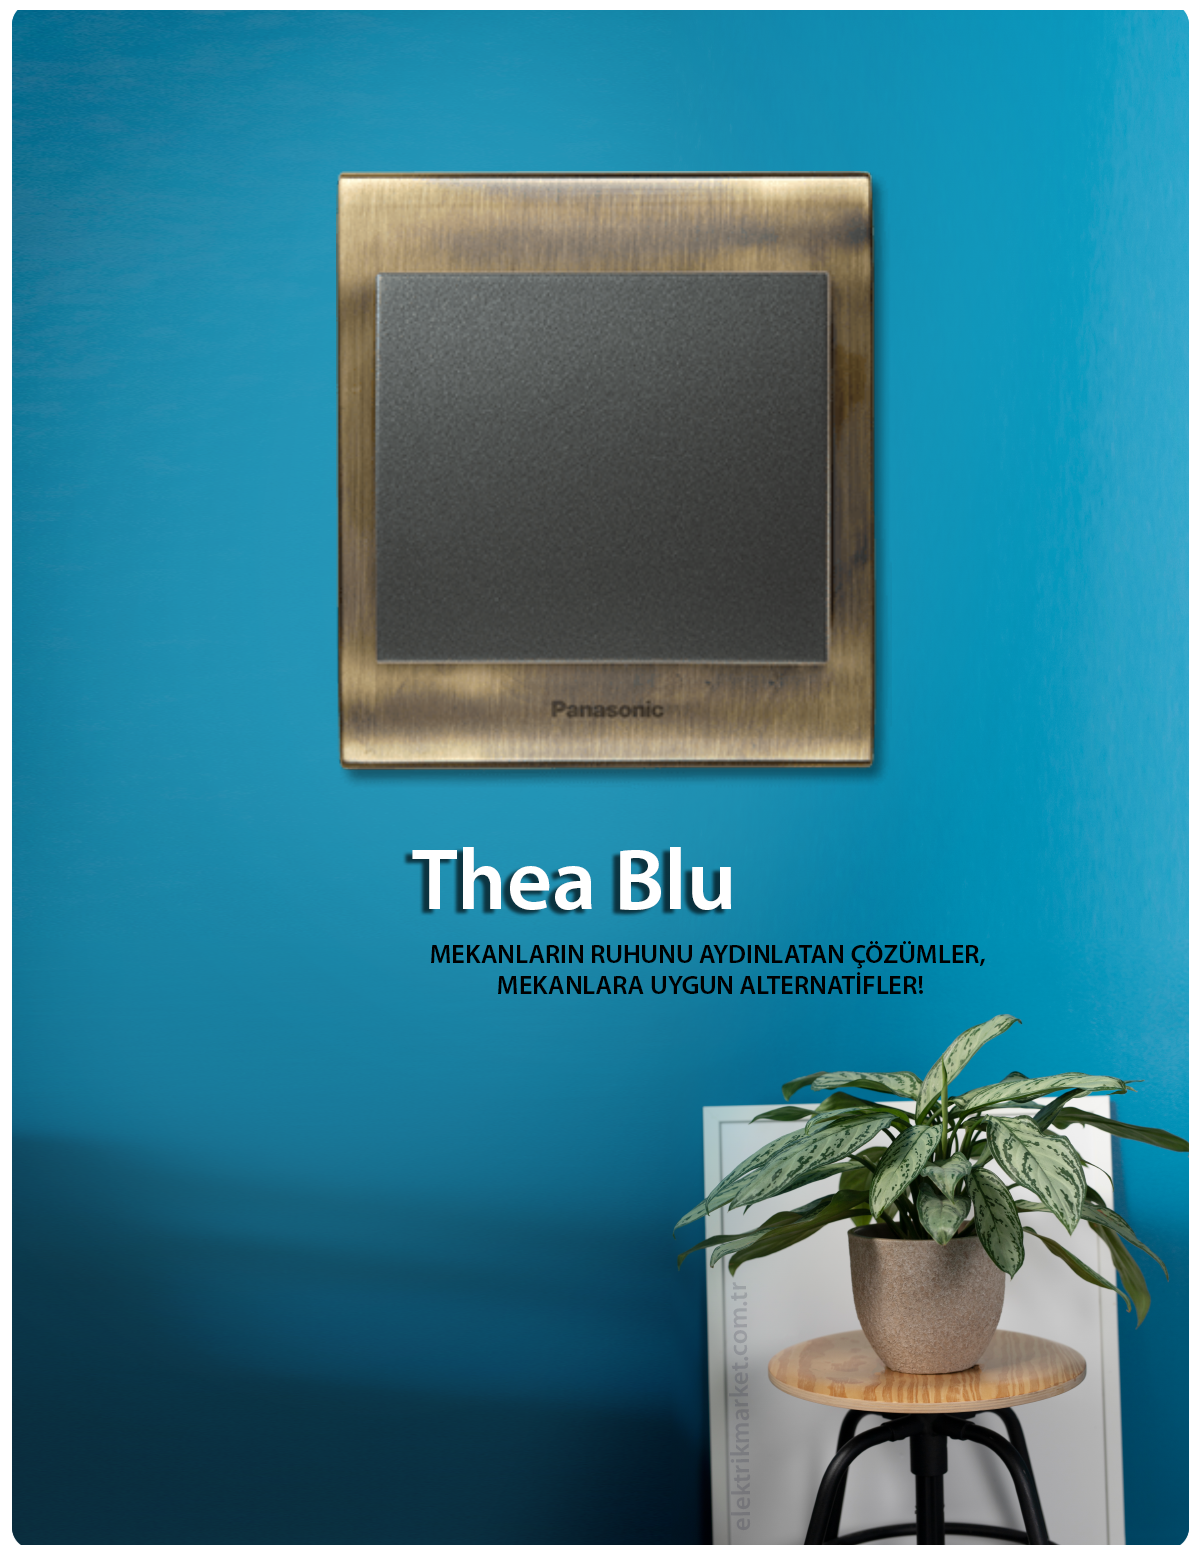 Thea Blue toptan